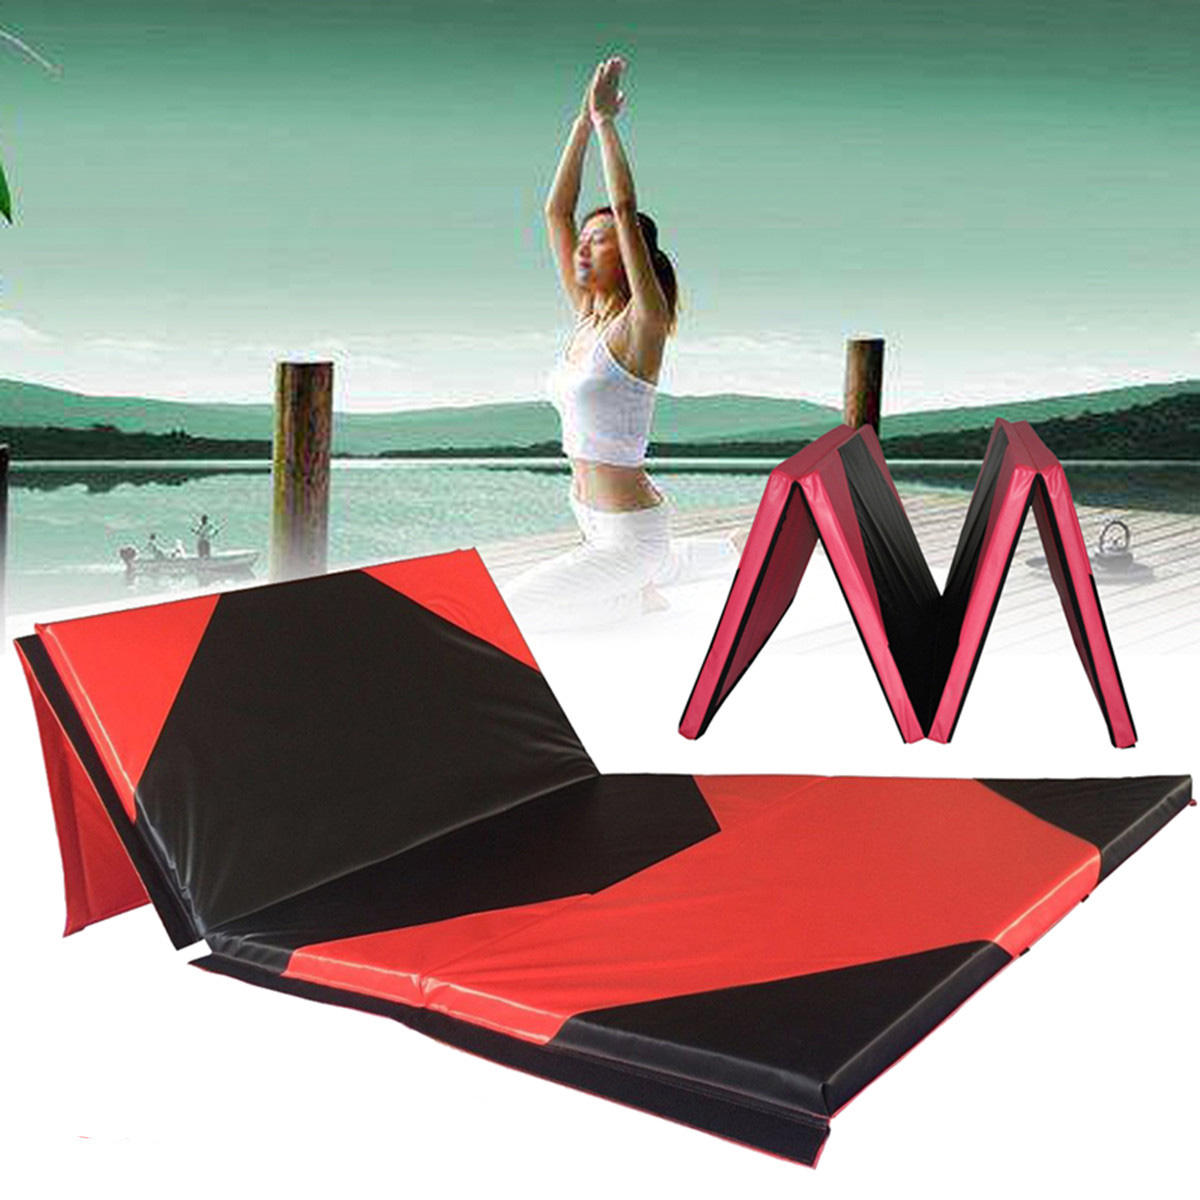 118x47x1.97inç Jimnastik Mat Jimnastik Katlanır Panel Yoga Egzersiz Tamburlaması Fitnes Pad